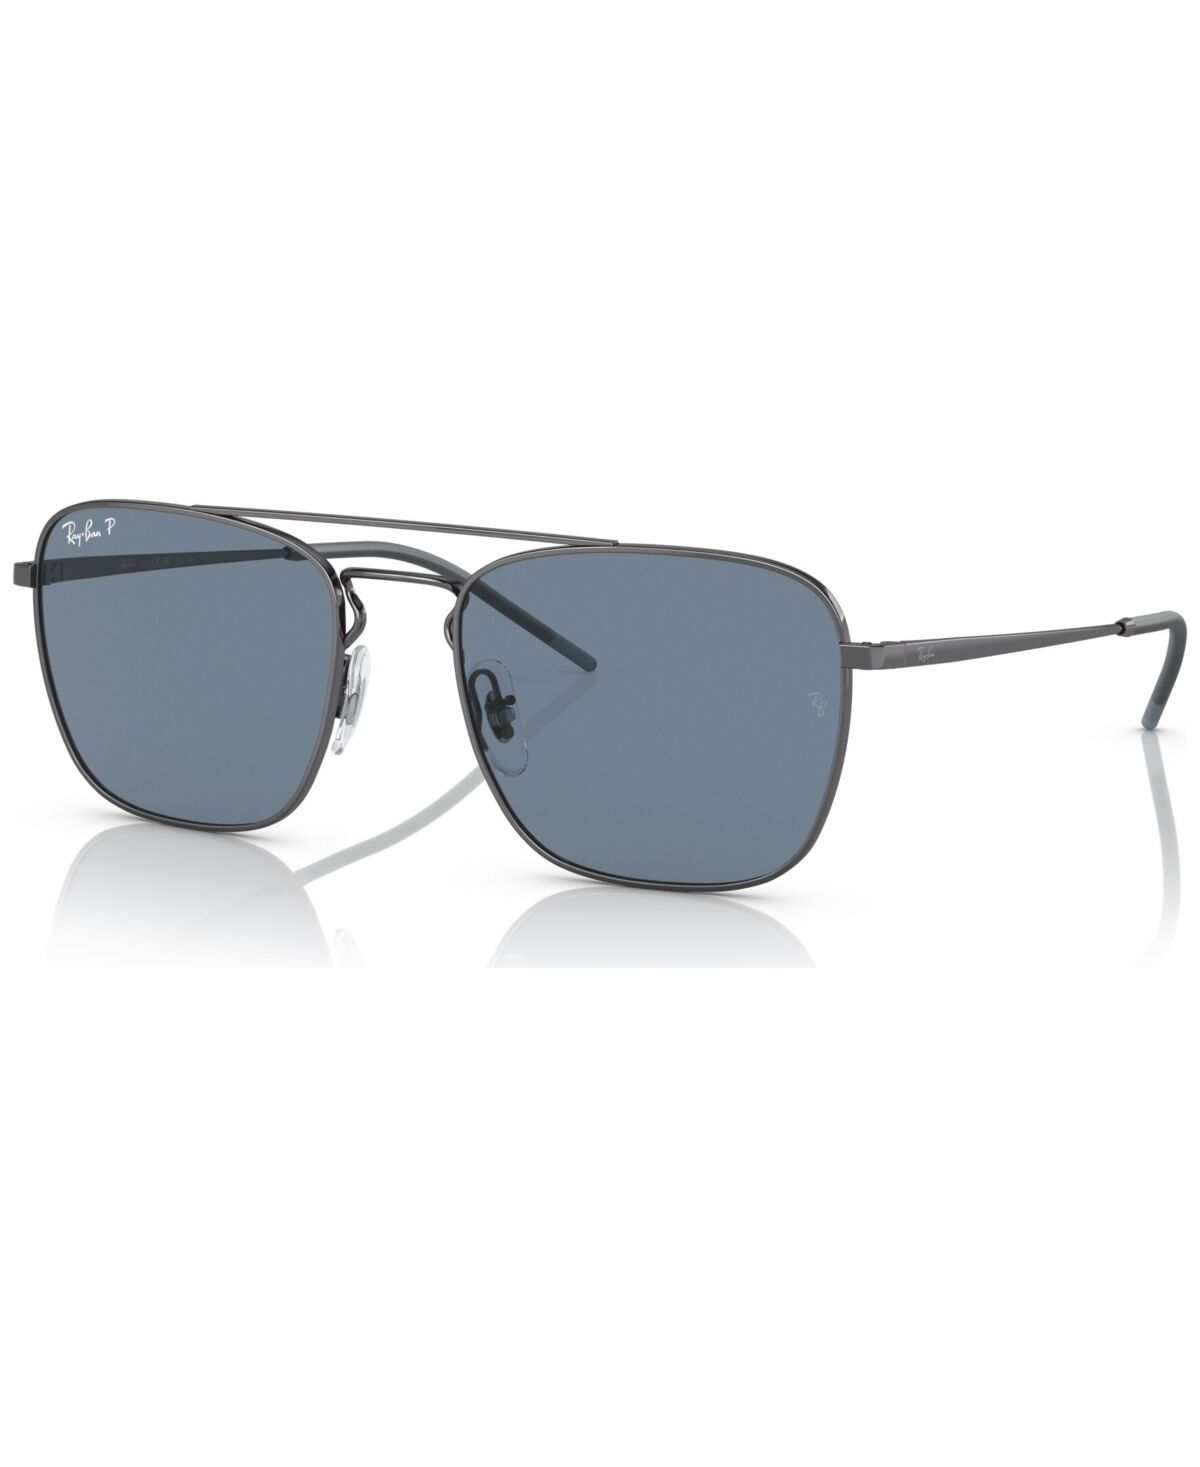 Ray-Ban Men's Polarized Sunglasses, RB358855-p - Gunmetal